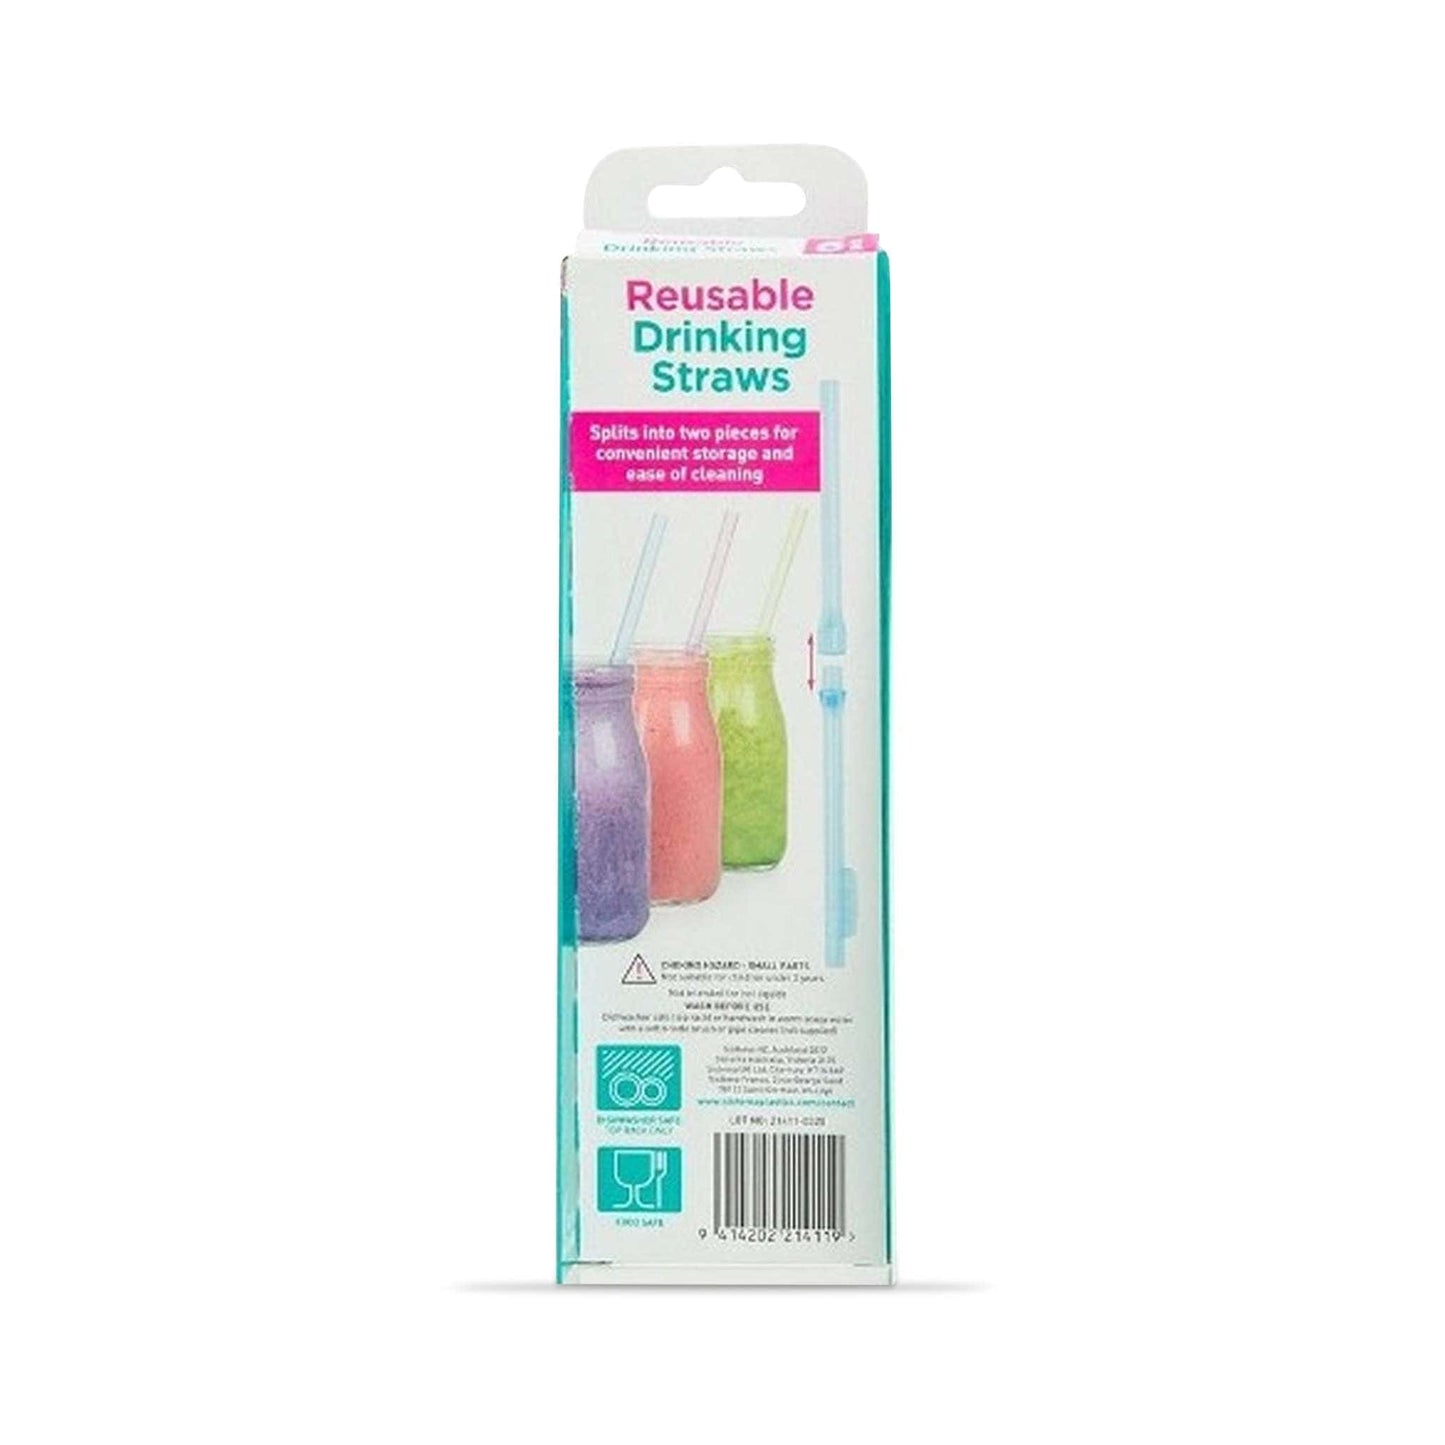 Sistema Straws Sistema Reusable Drinking Straws - 6 Pack